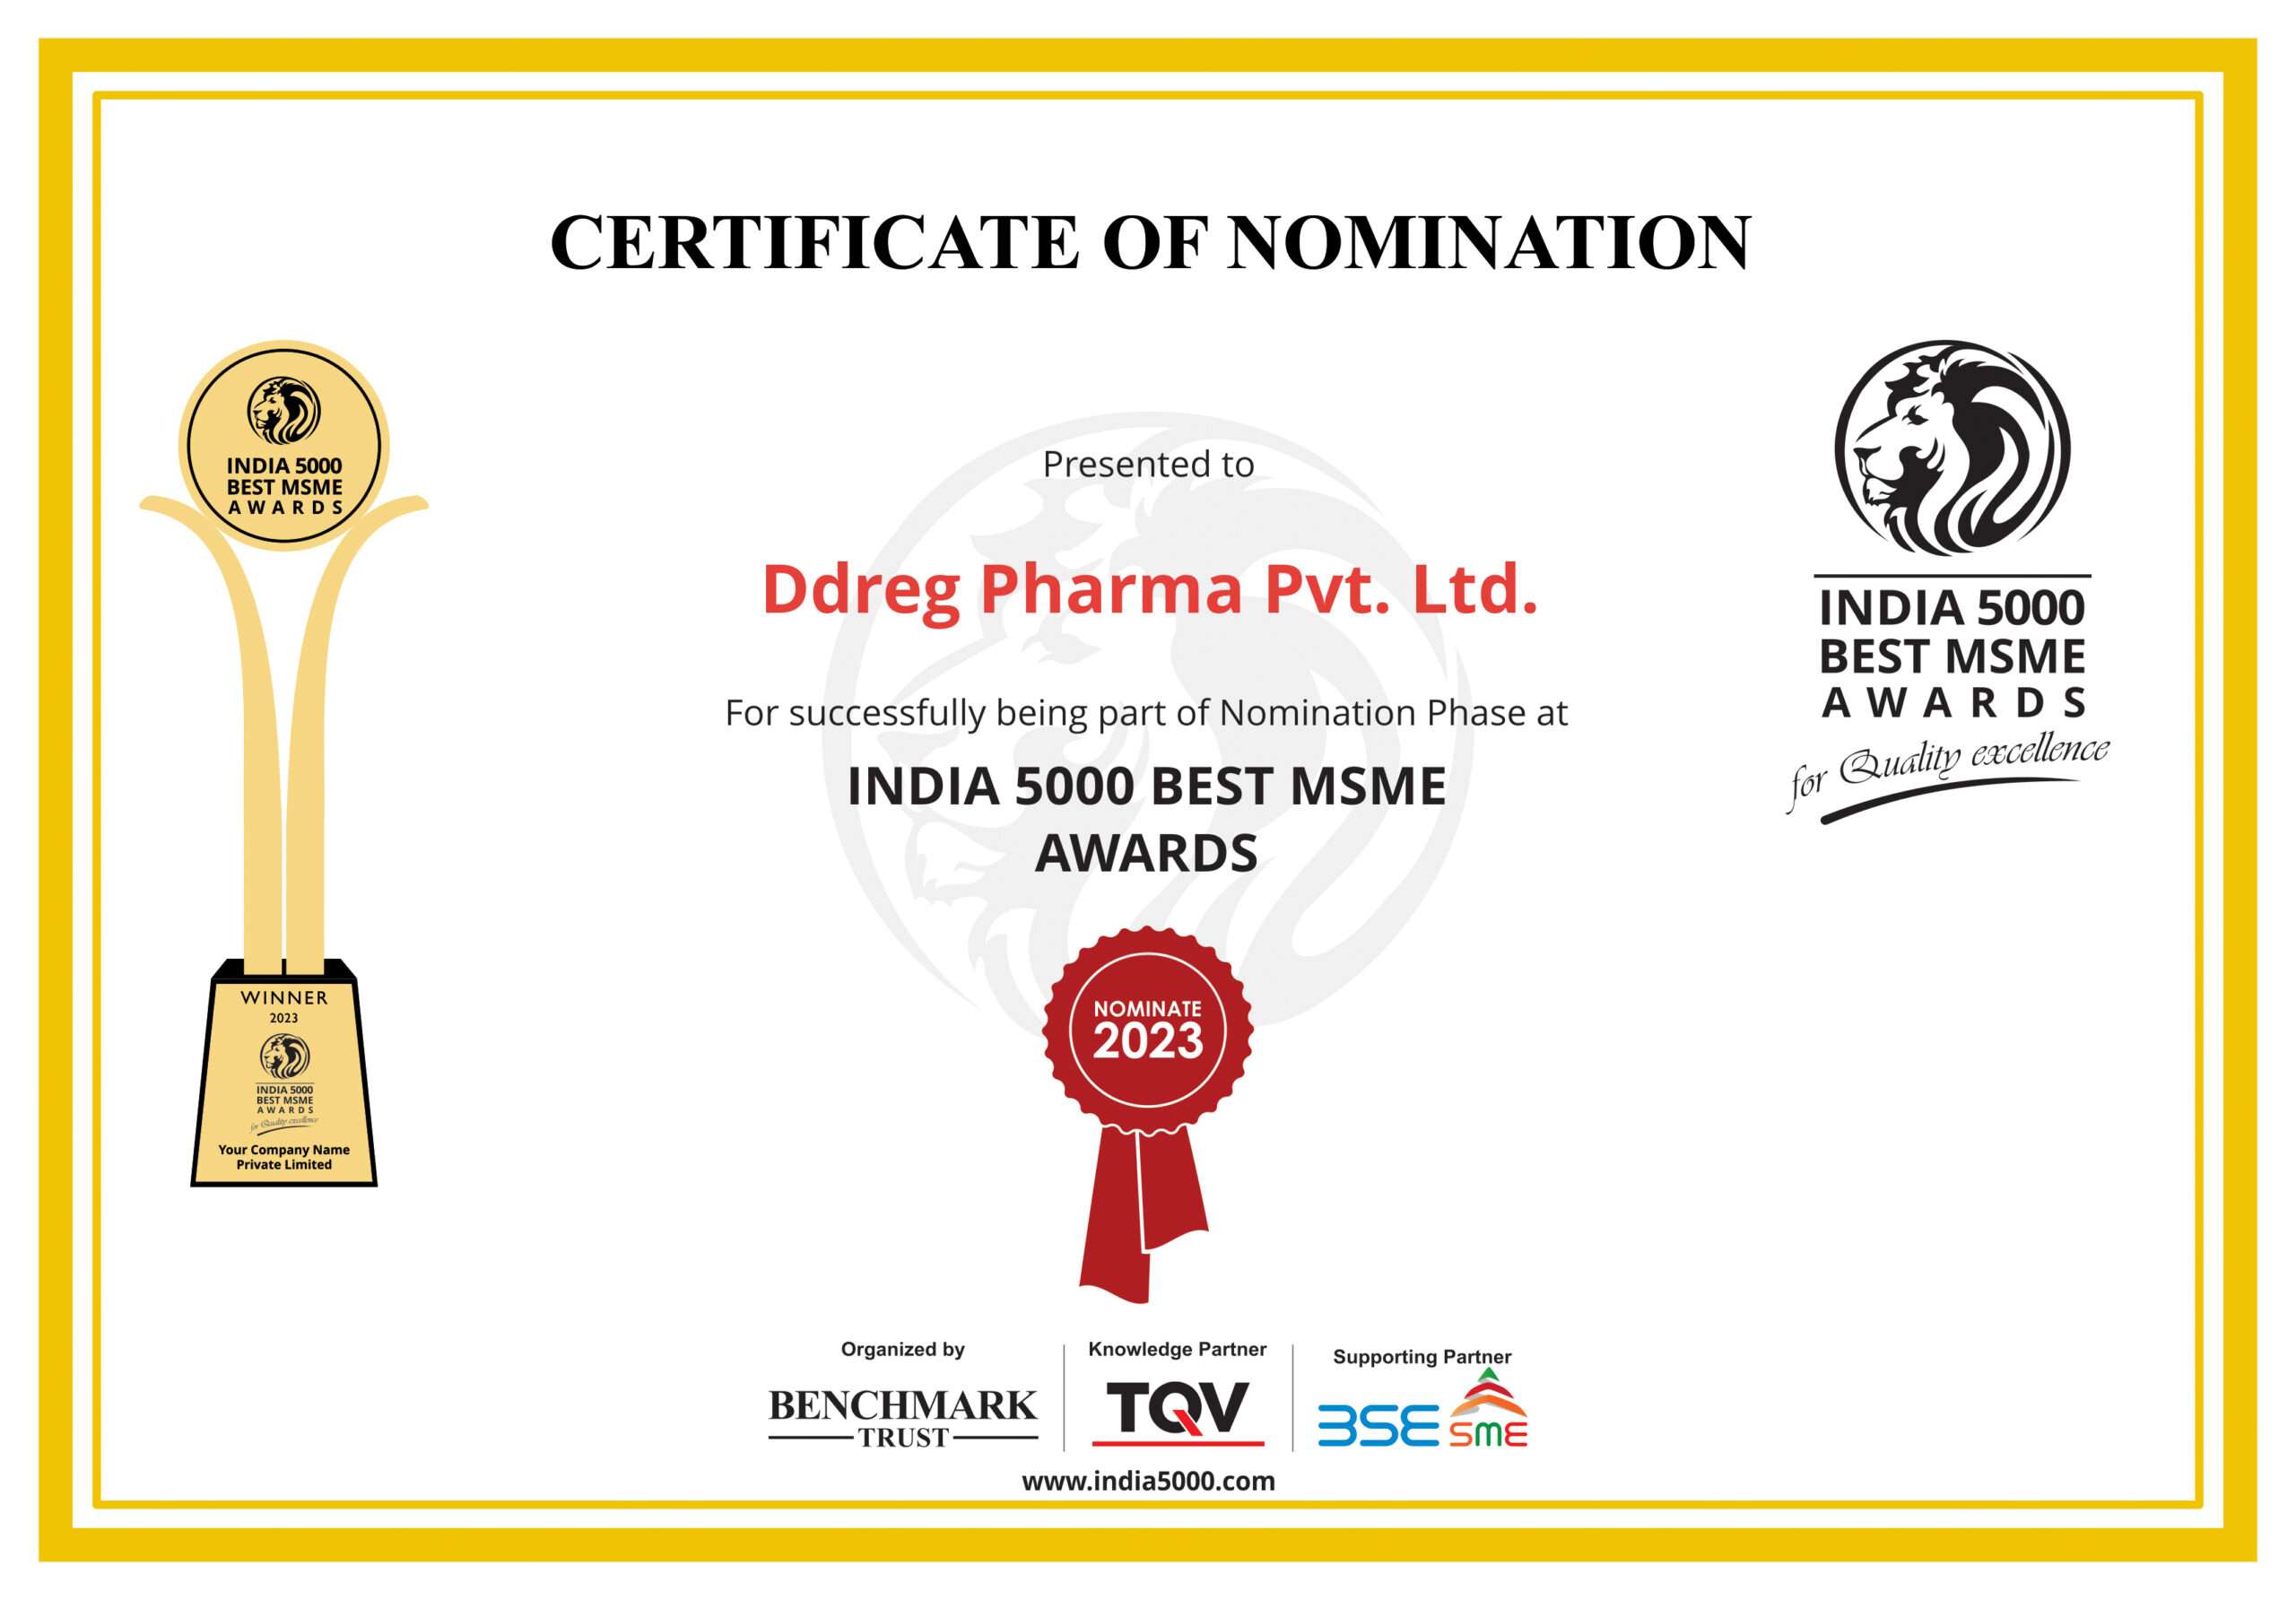 DDReg nominated for India 5000 Best MSME Awards 2023